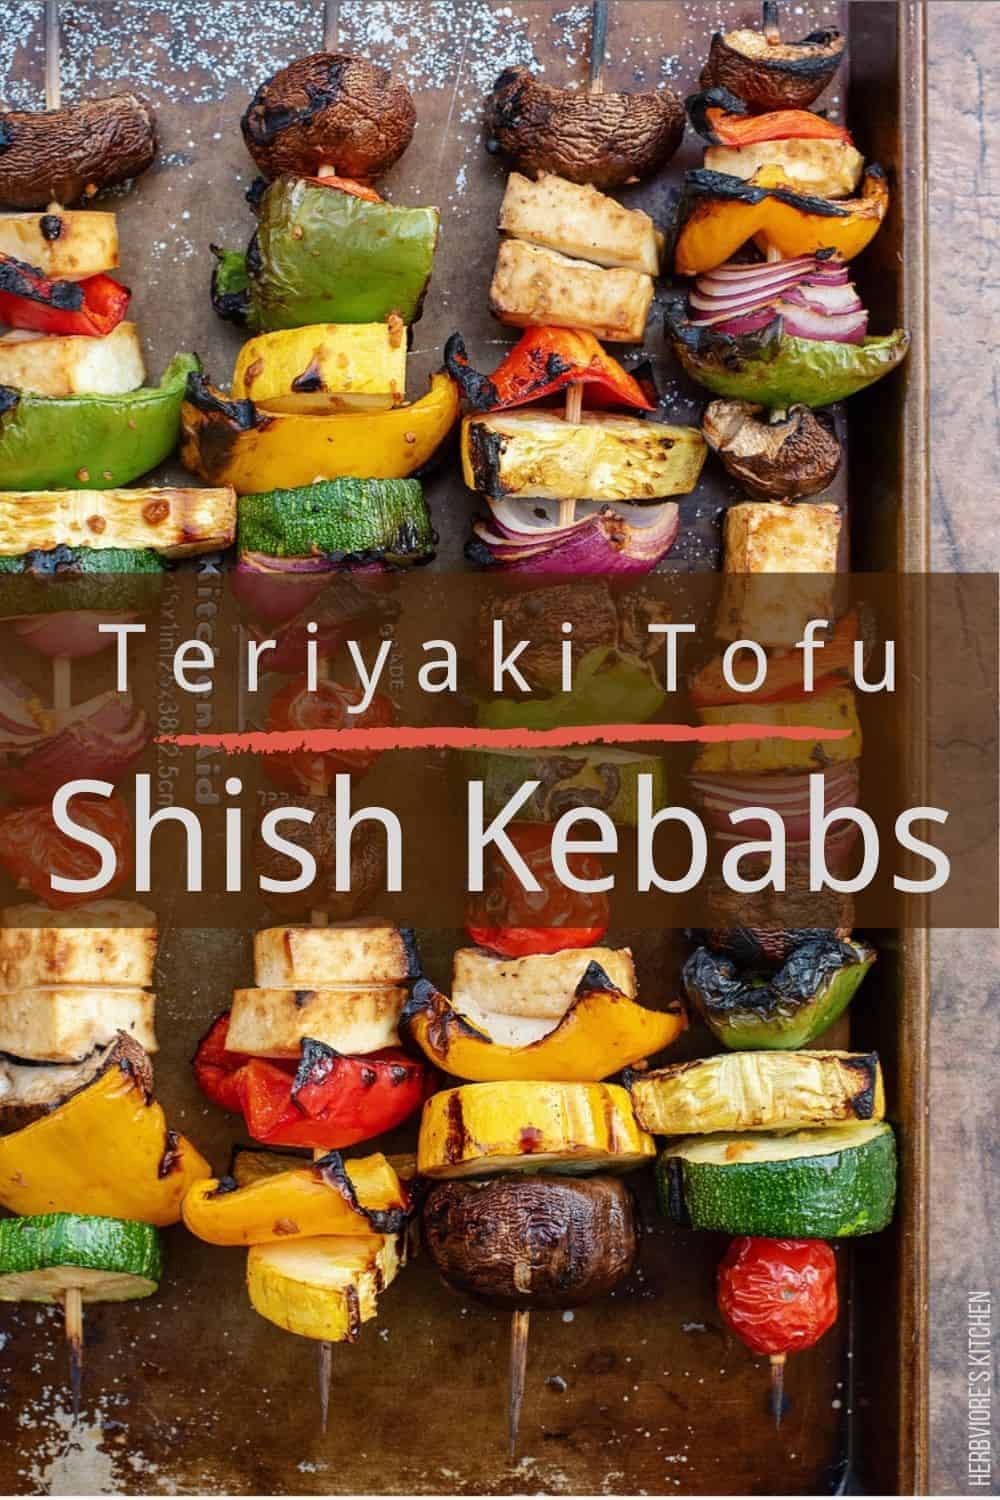 Teriyaki Tofu Shish Kebabs (aka Shish Kabobs)